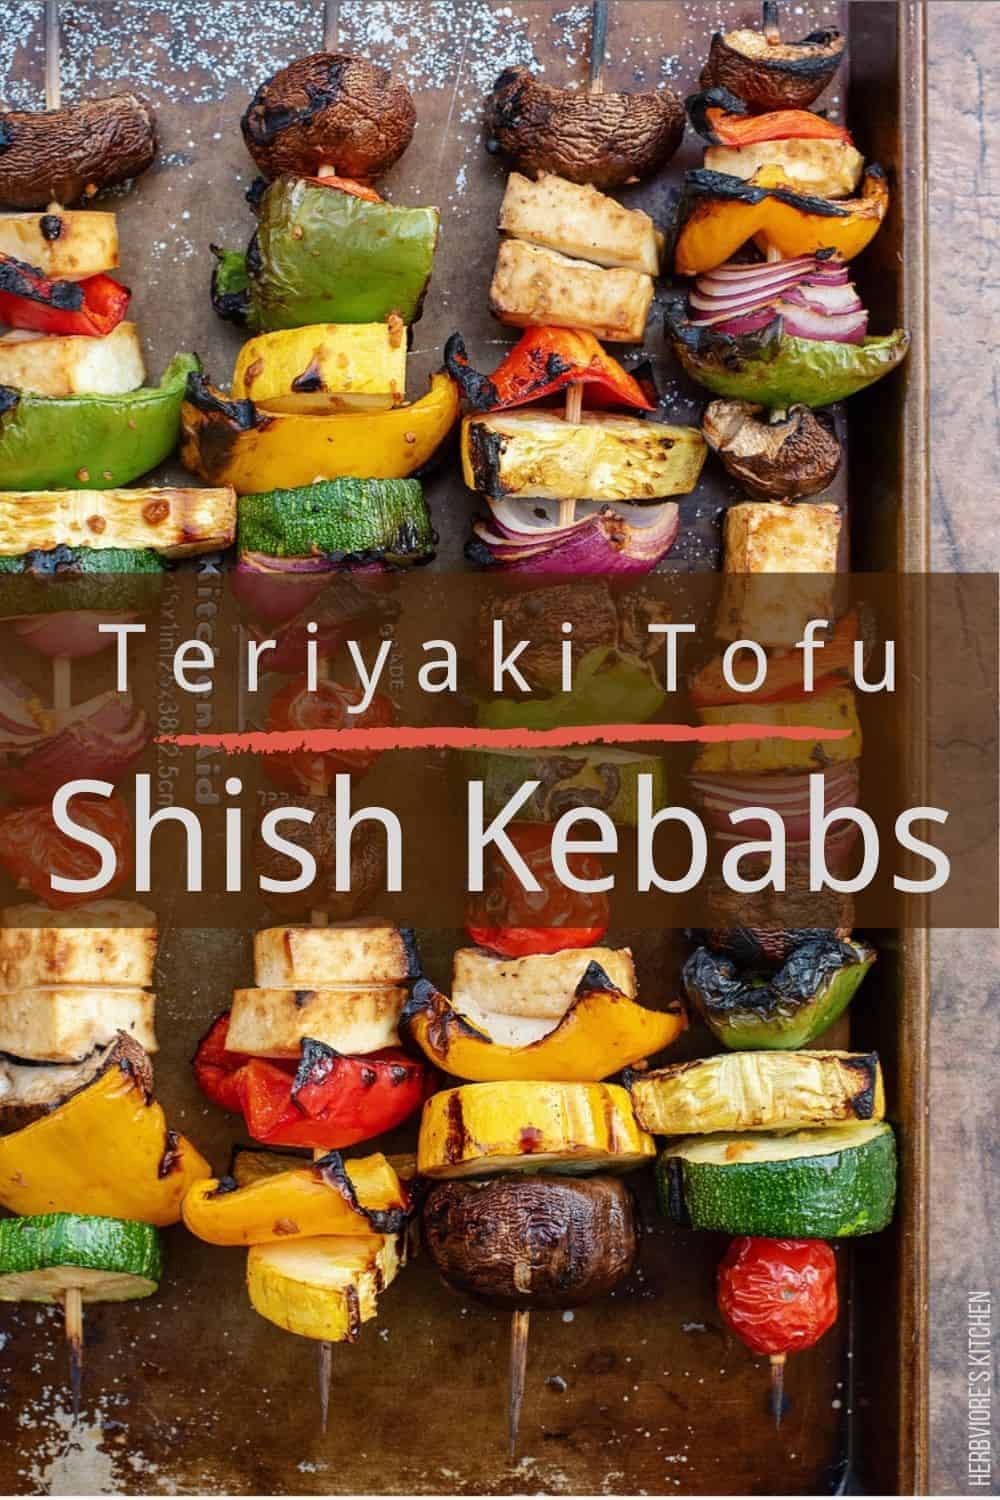 Teriyaki Tofu Shish Kebabs (aka Shish Kabobs)